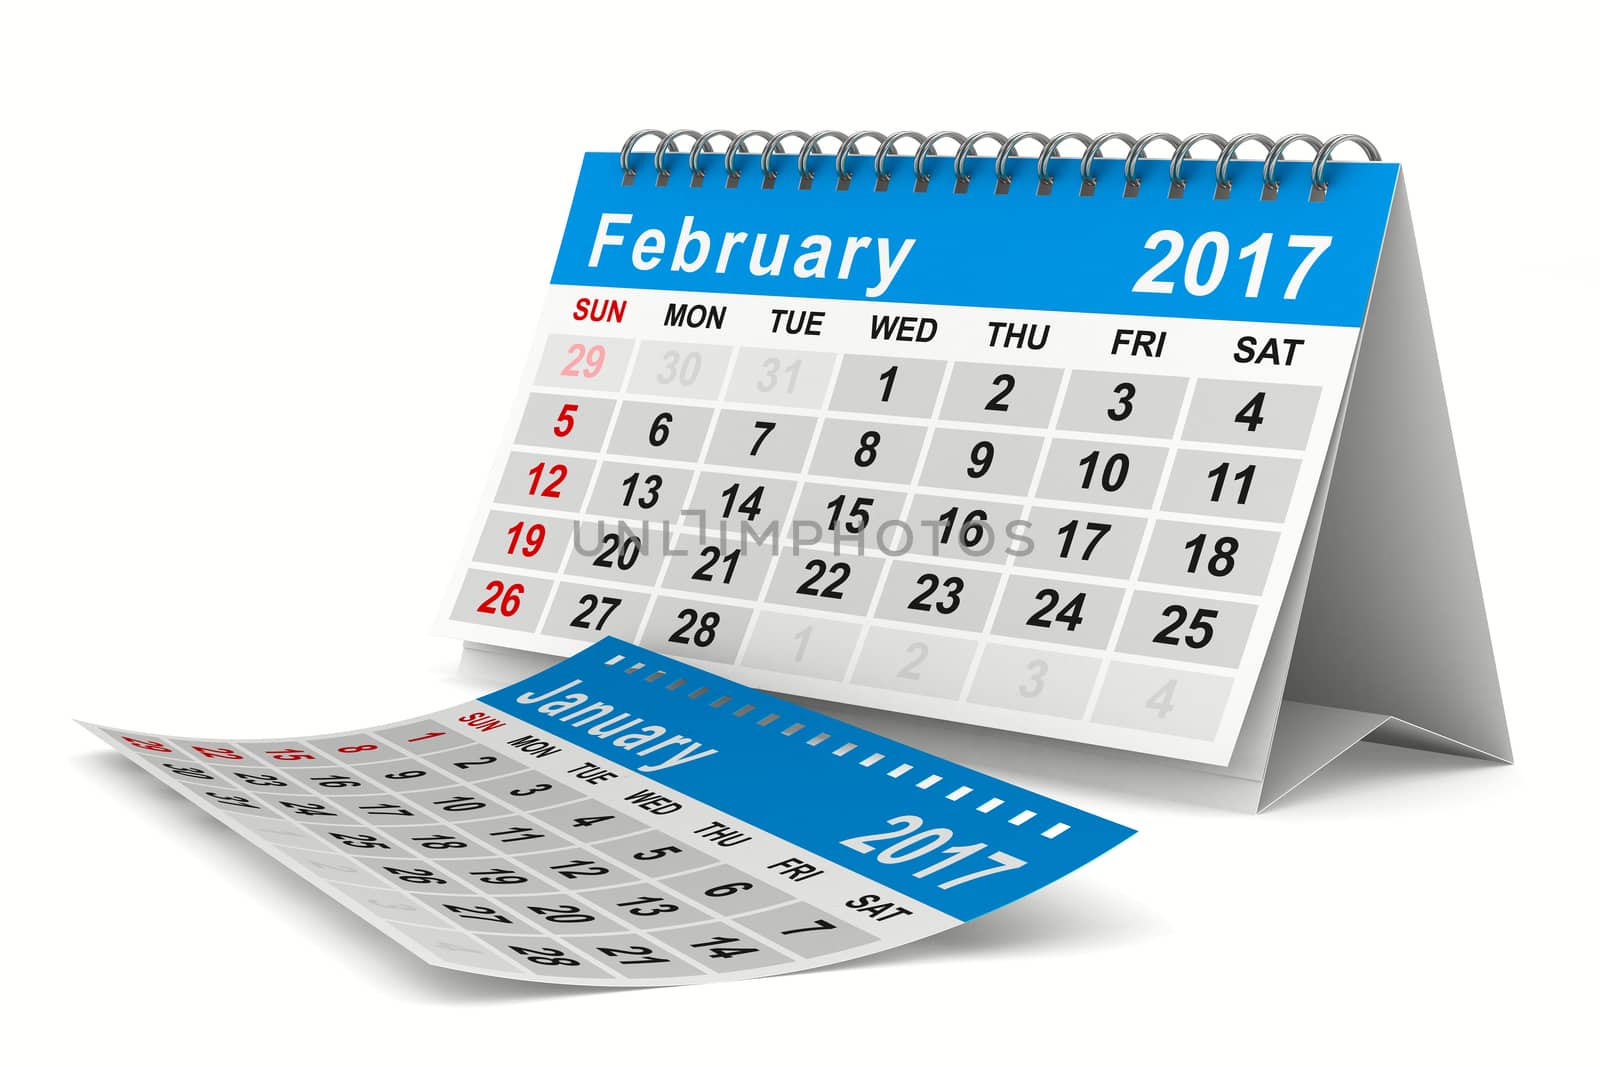 2017 year calendar. February. Isolated 3D image